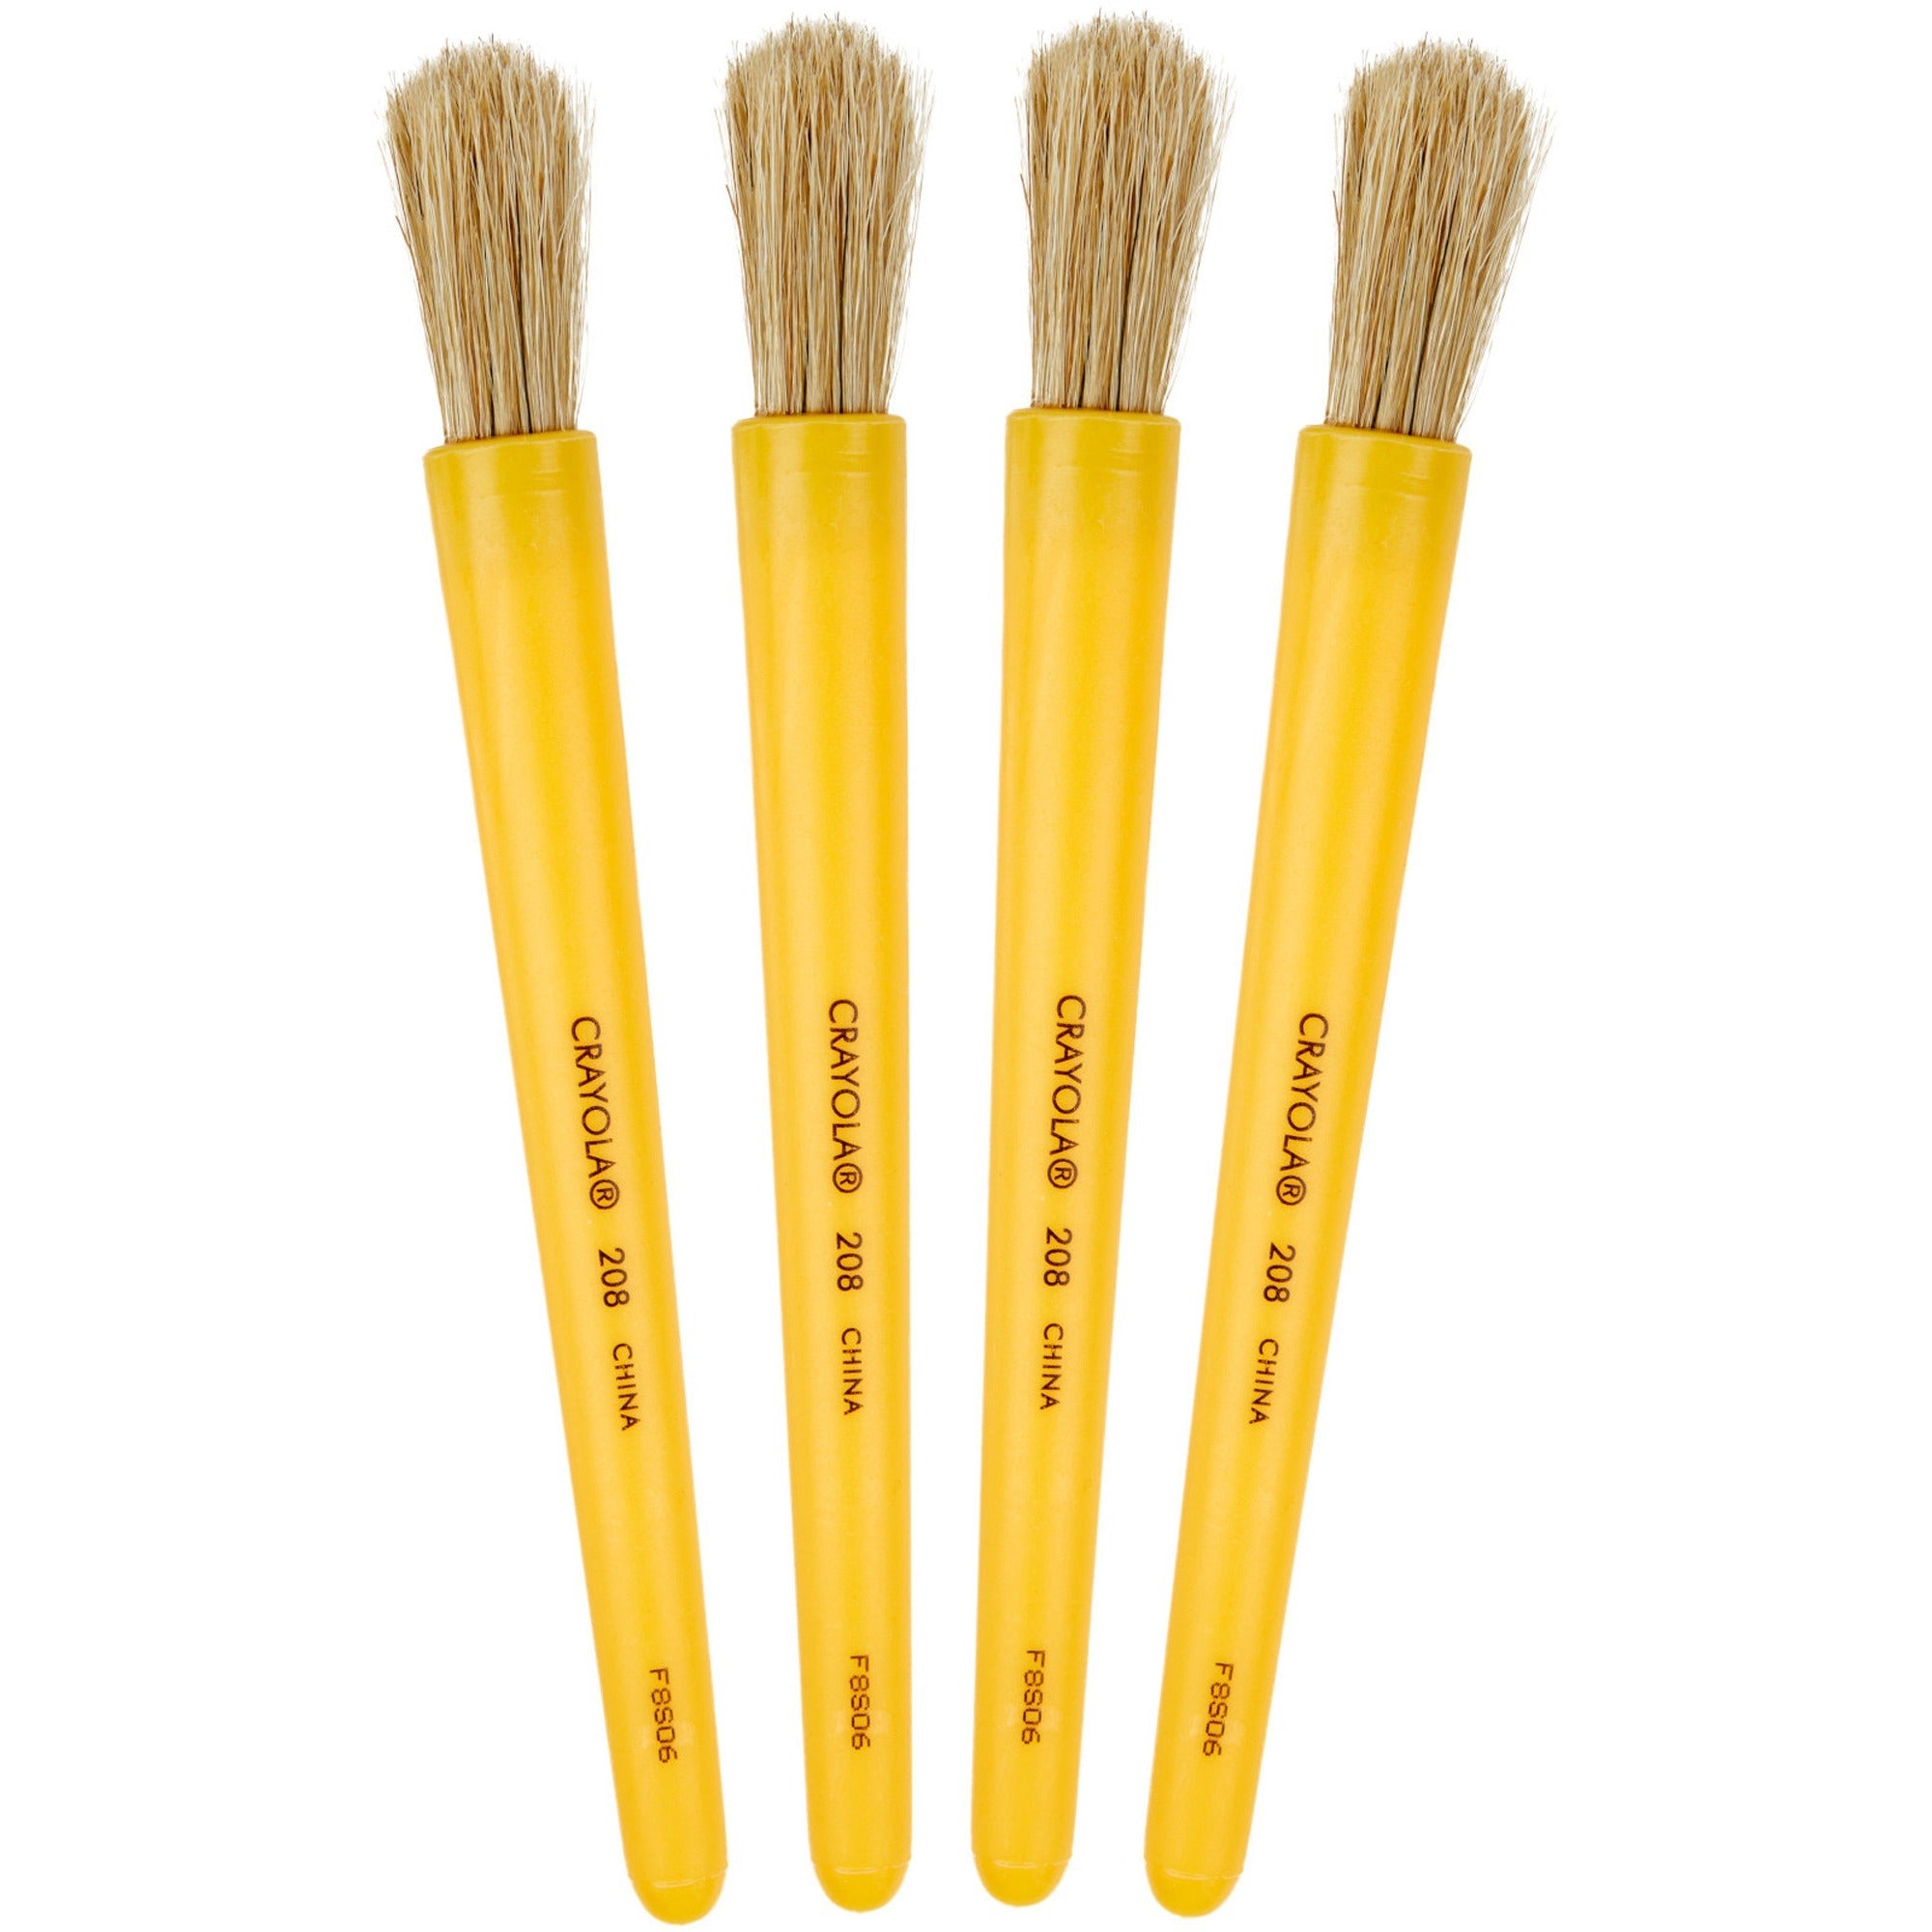 crayola-jumbo-paint-brush-72-brushes-plastic-yellow-handle_cyo502080042 - 1